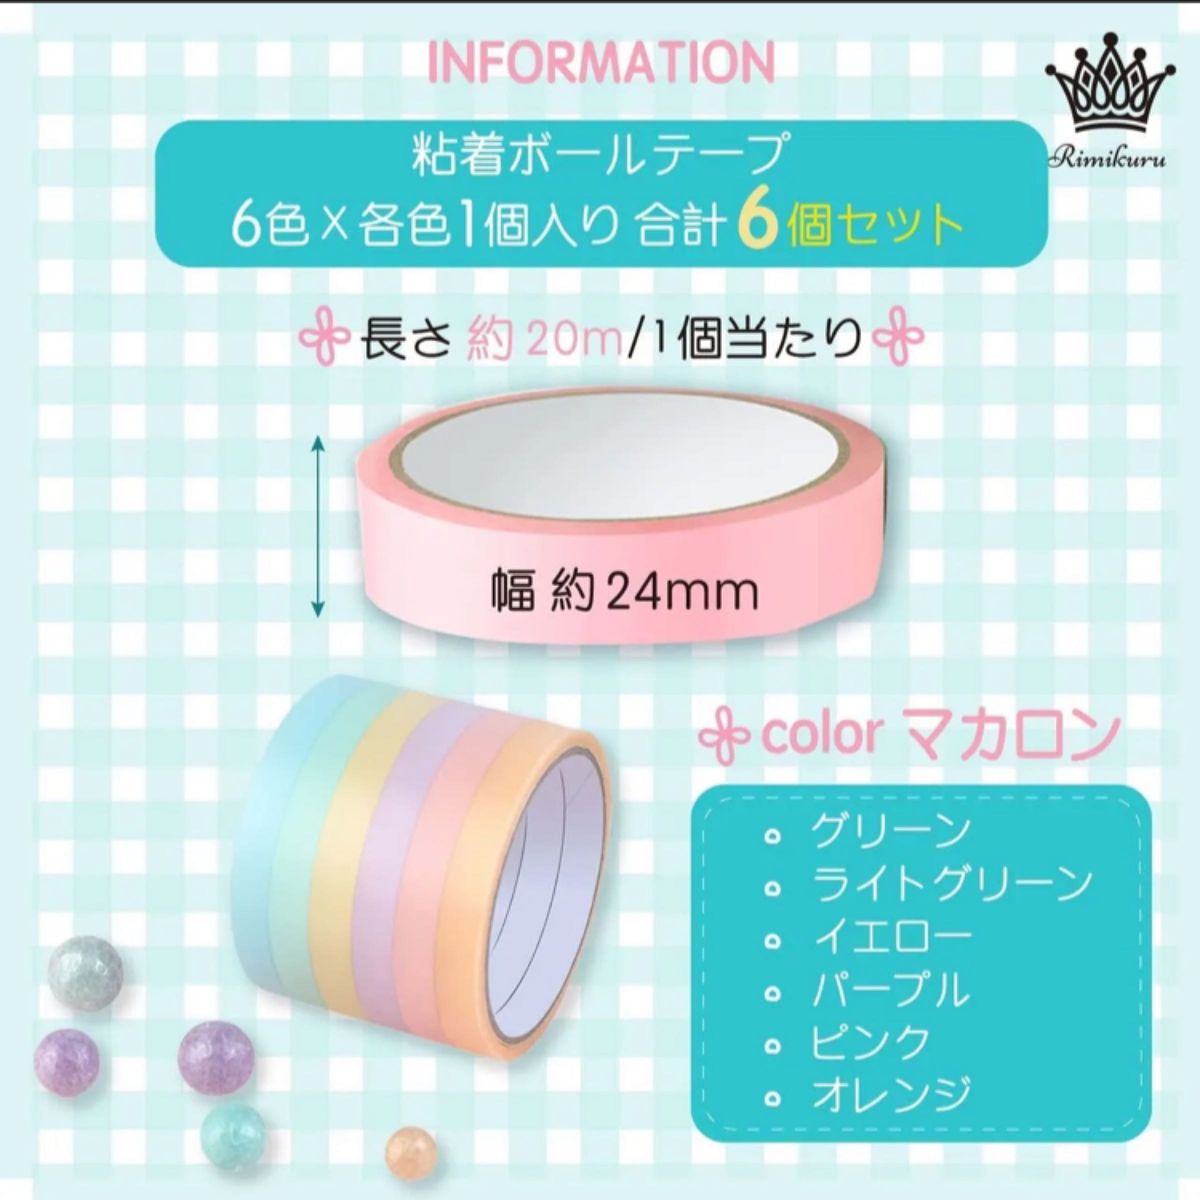 Rimikuru 粘着ボールテープ スティッキーボール テープ セット 減圧ボール 粘着 ストレス解消 6色 6個セット